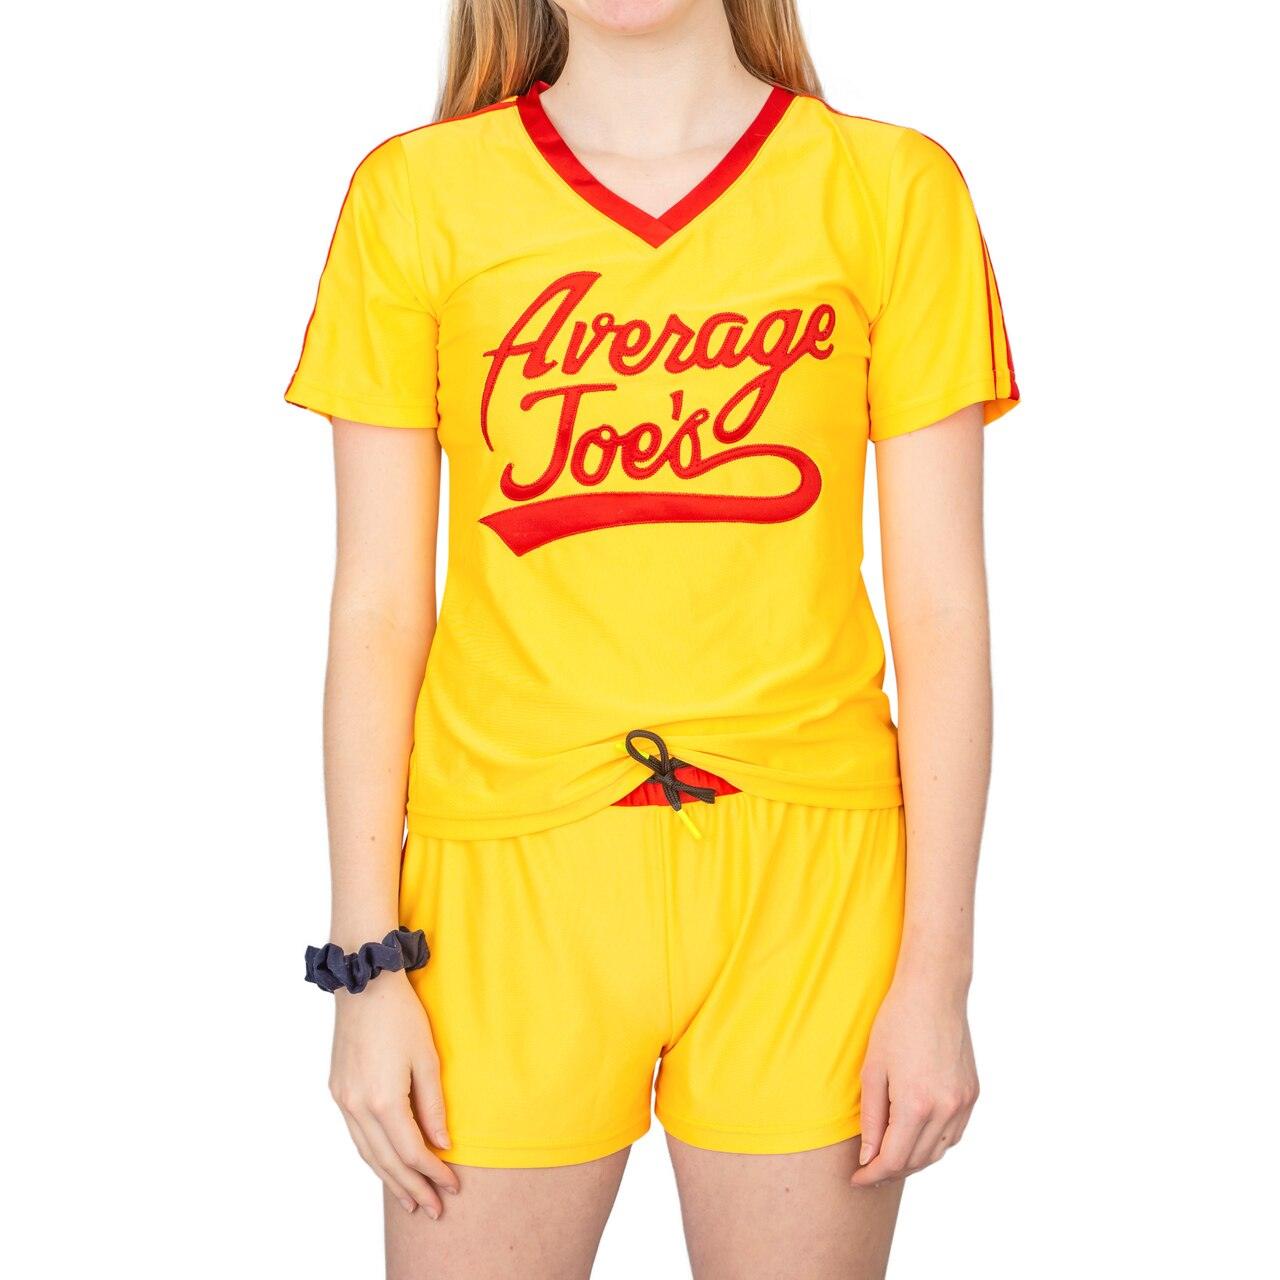 Dodgeball Average Joe's Womens's Halloween Costume Set